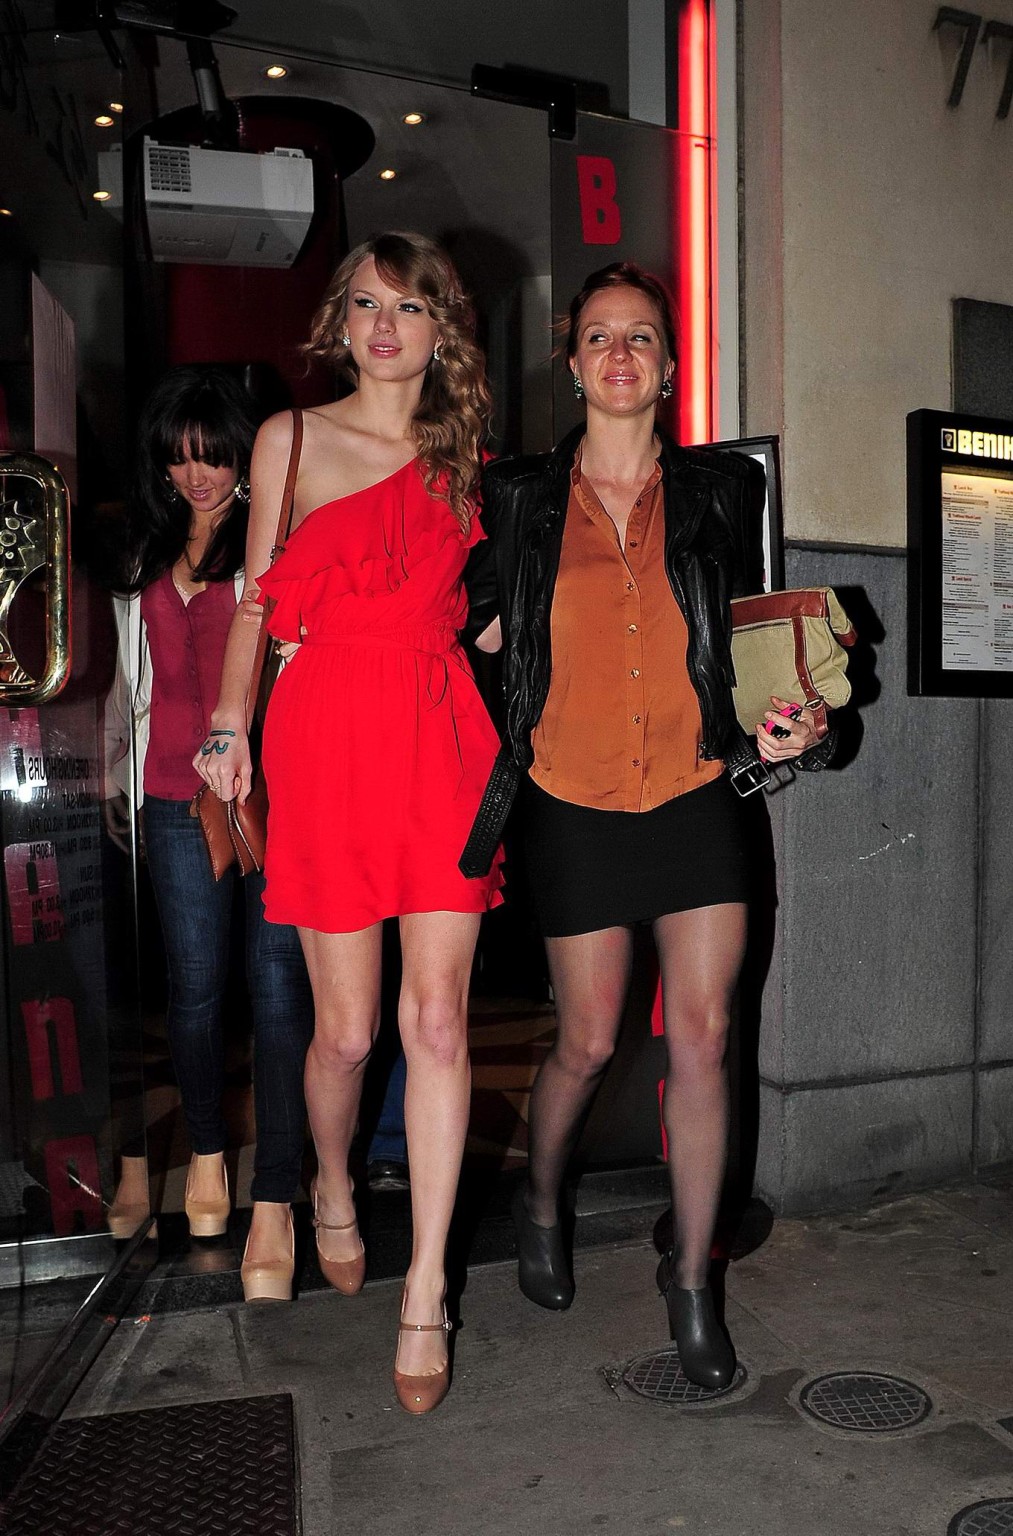 Taylor Swift leggy in red mini dress leaving Benihana Restaurant in London #75311822